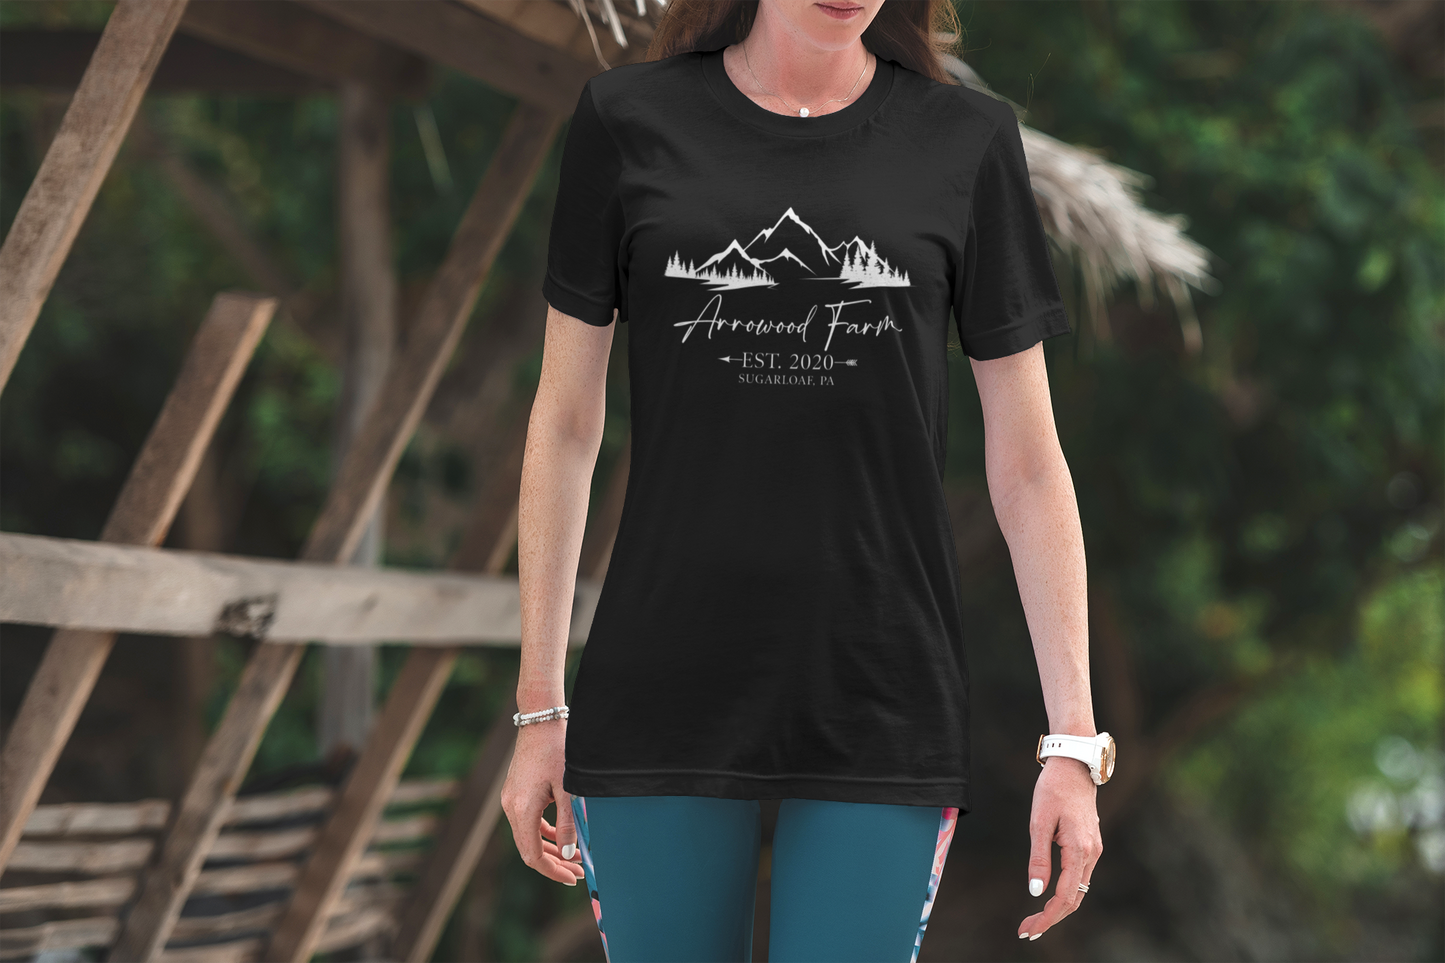 Arrowood Farm - Light Text T-Shirt